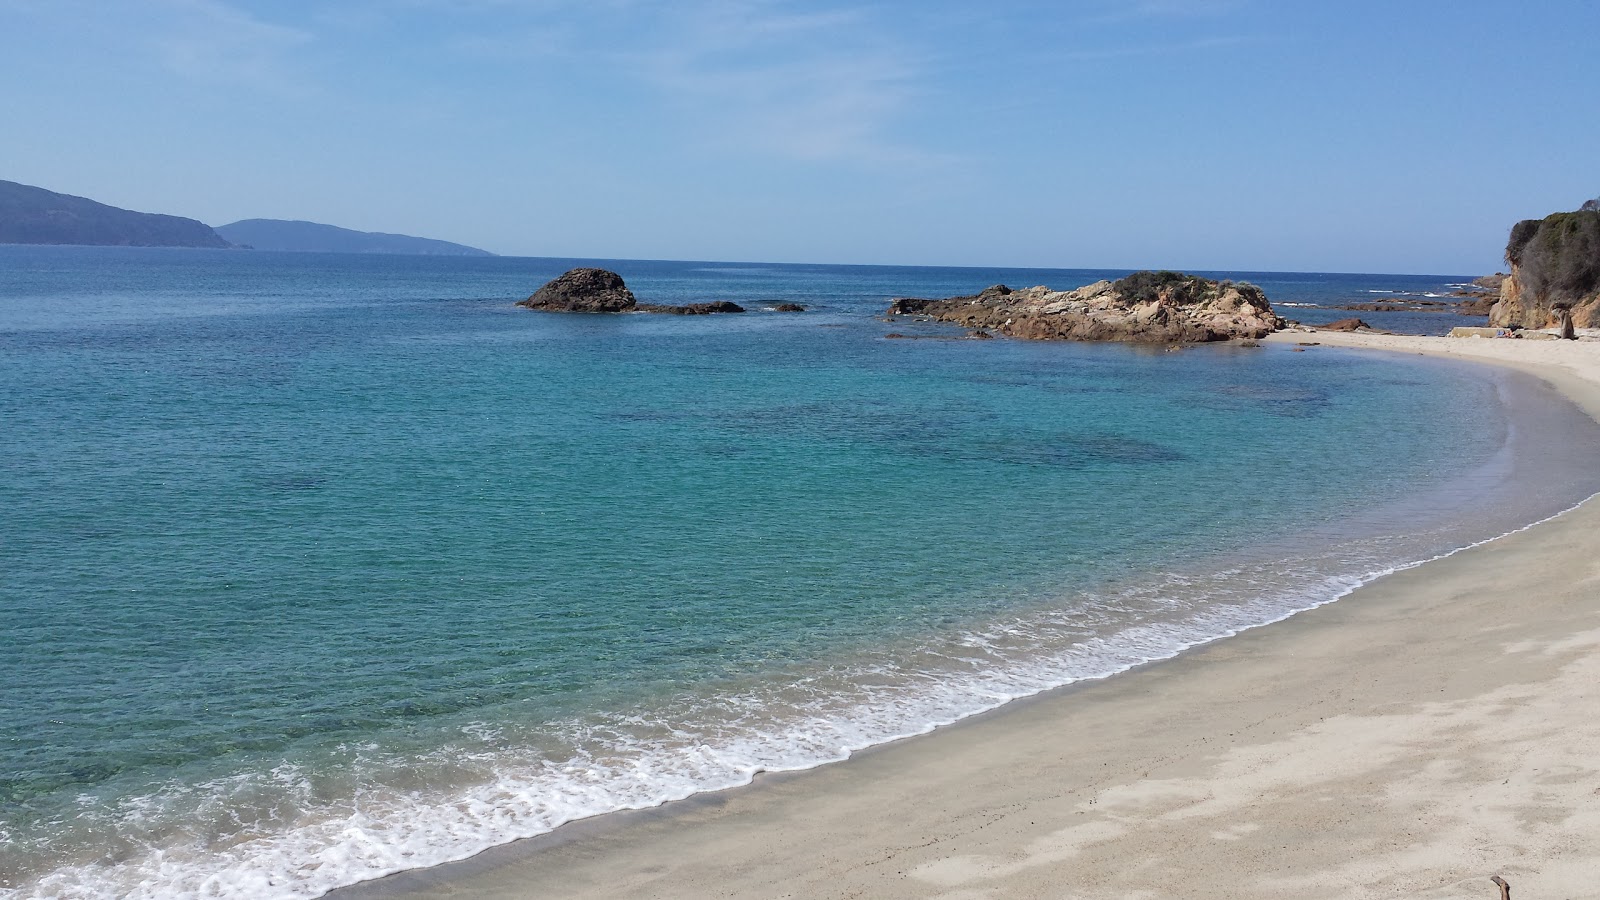 Foto de Liamone beach II - lugar popular entre os apreciadores de relaxamento